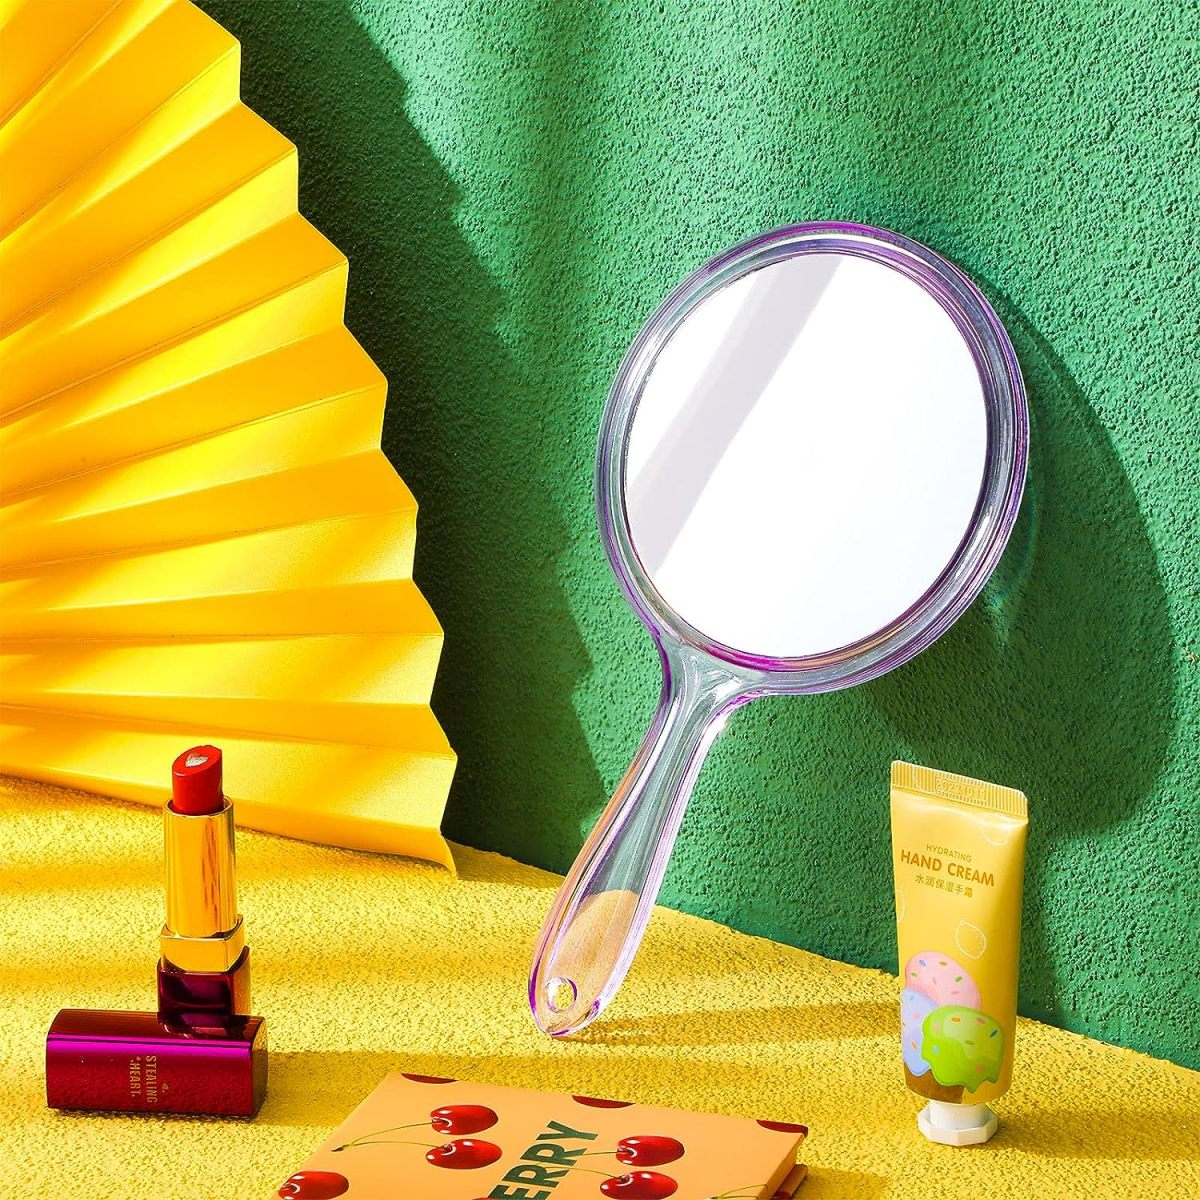 ELKUAIE Griff Doppelspiegel Kosmetikspiegel transparent